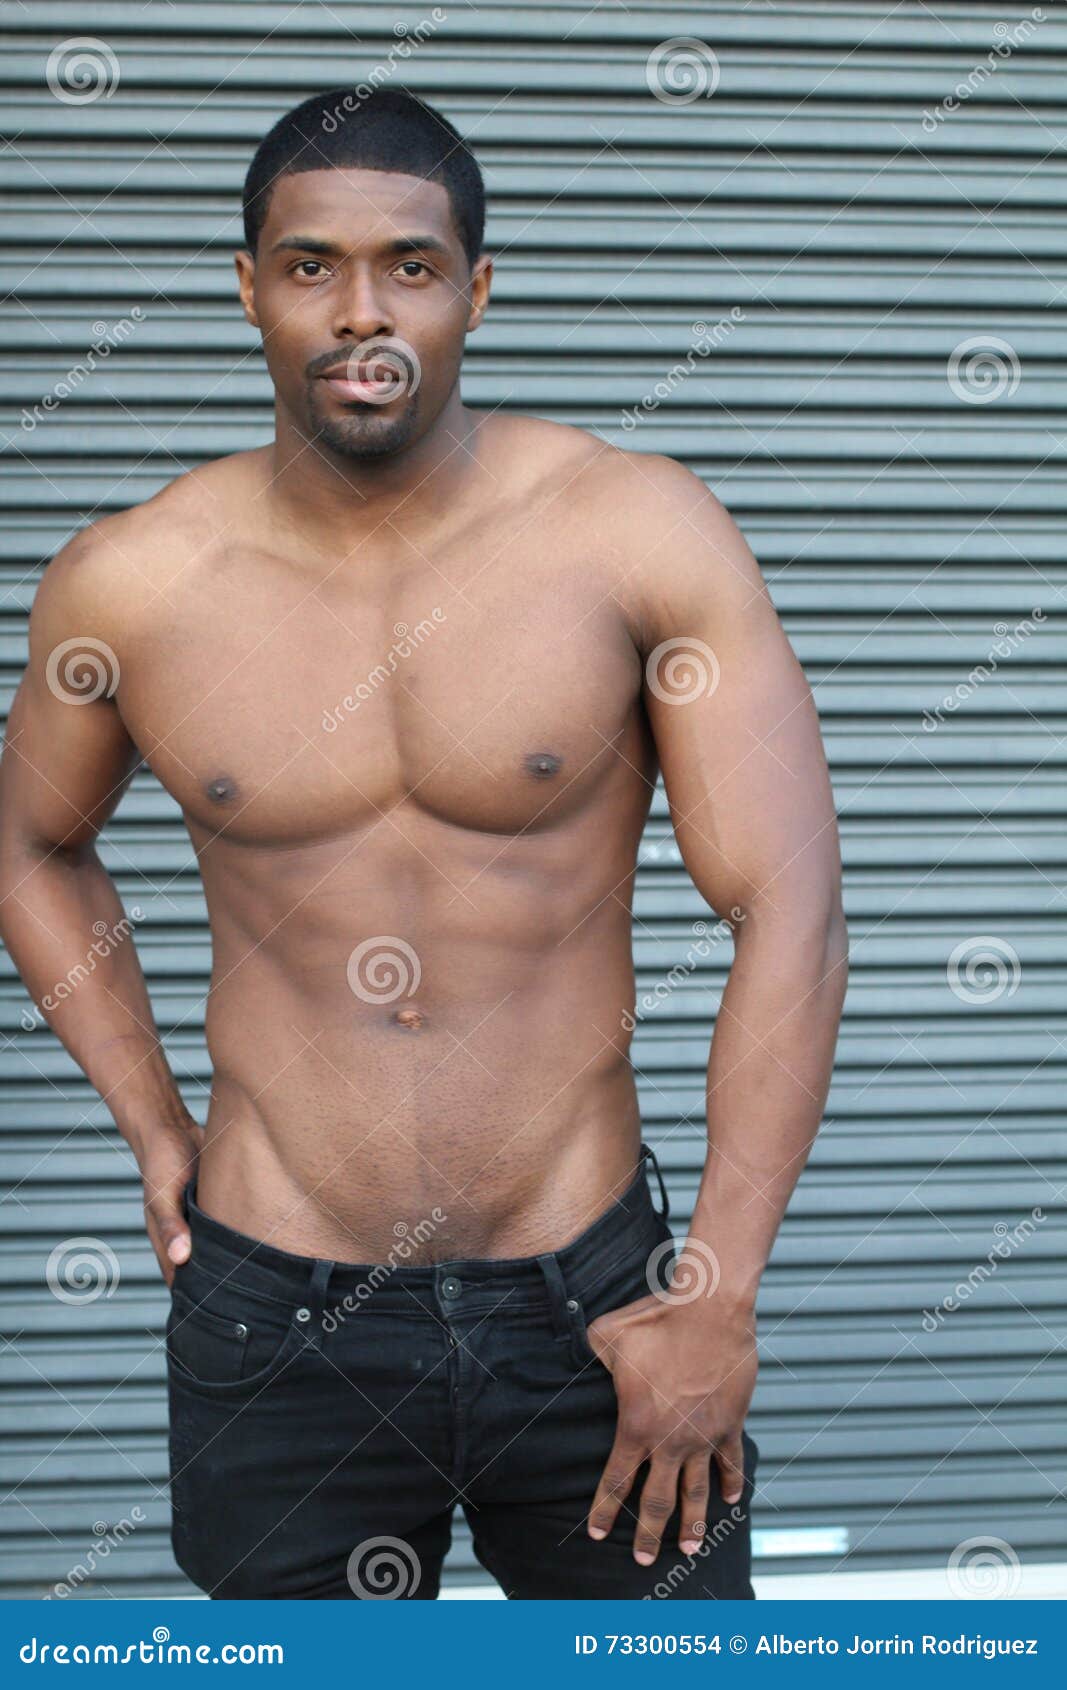 https://thumbs.dreamstime.com/z/beautiful-muscular-black-male-model-nice-abs-v-73300554.jpg